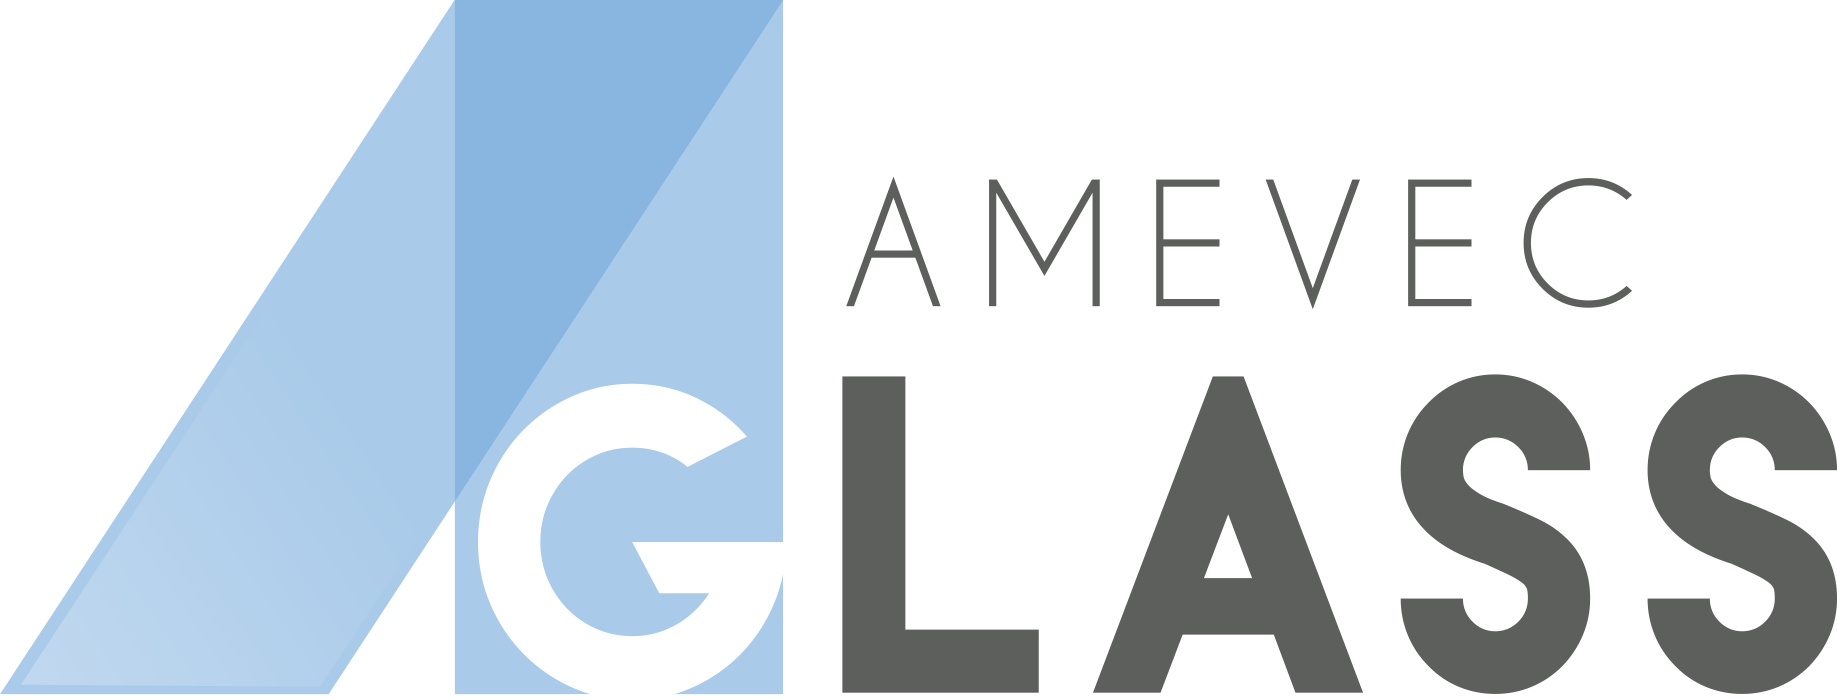 AmevecGlass_logo